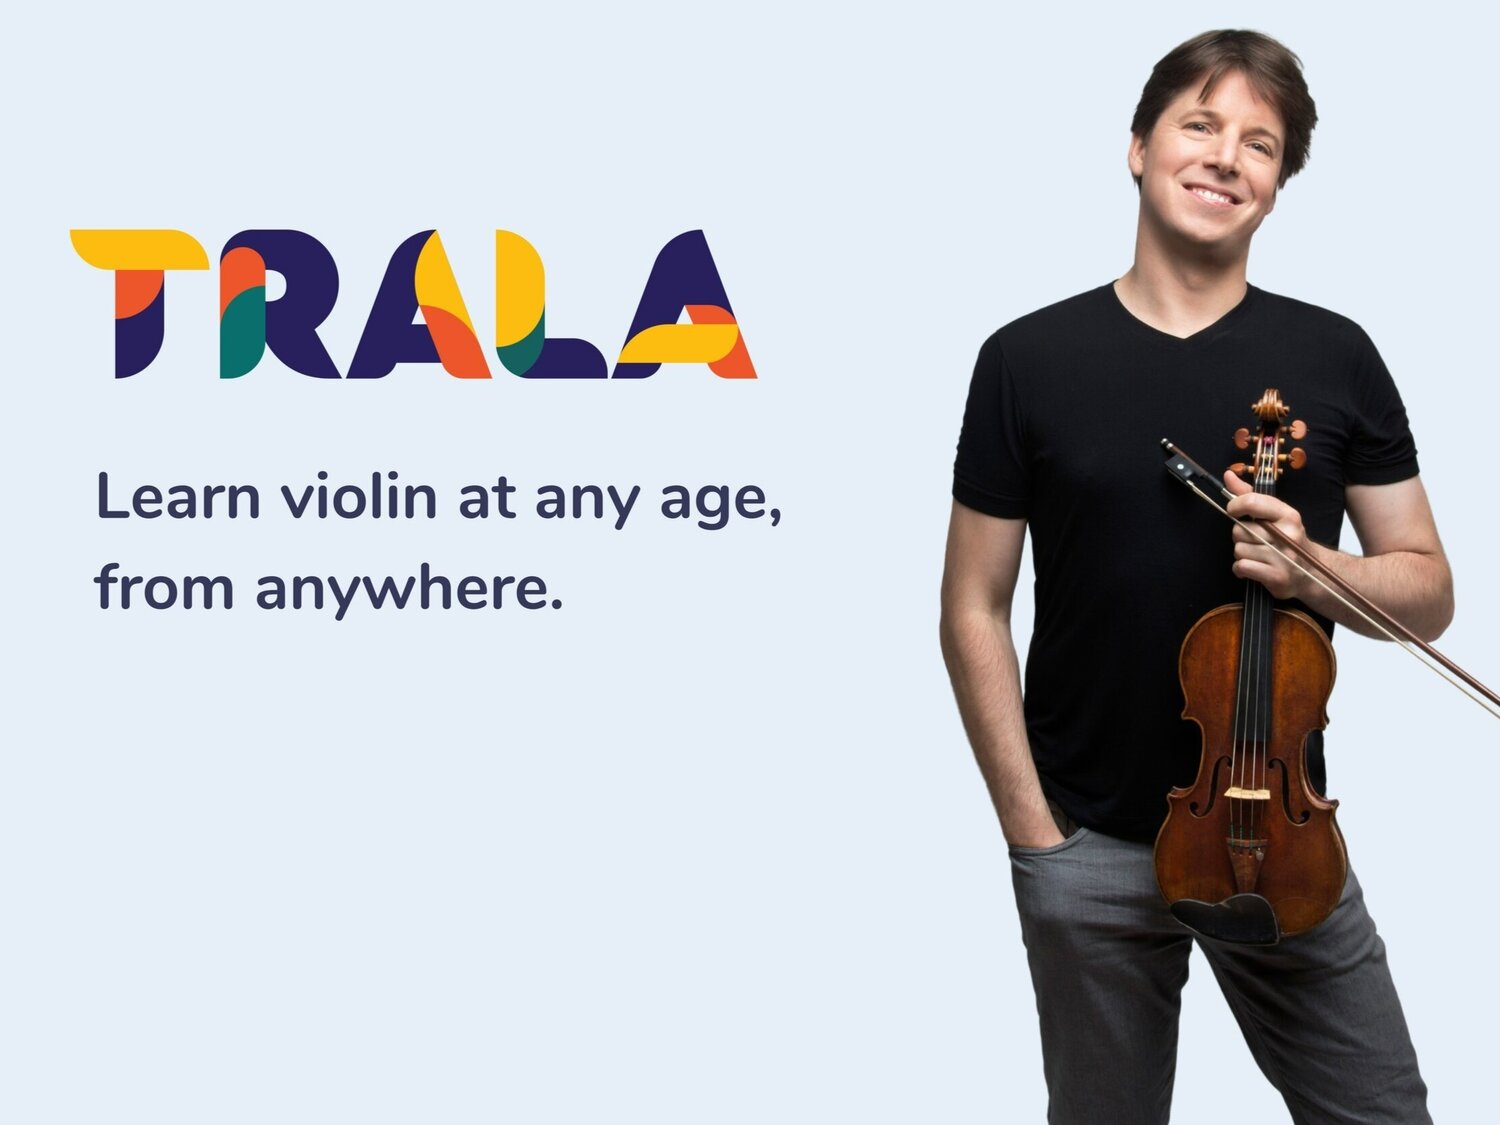 Joshua violin. Джошуа Белл. Joshua Bell Violin. Скрипач Джошуа Белл социальные психологи.